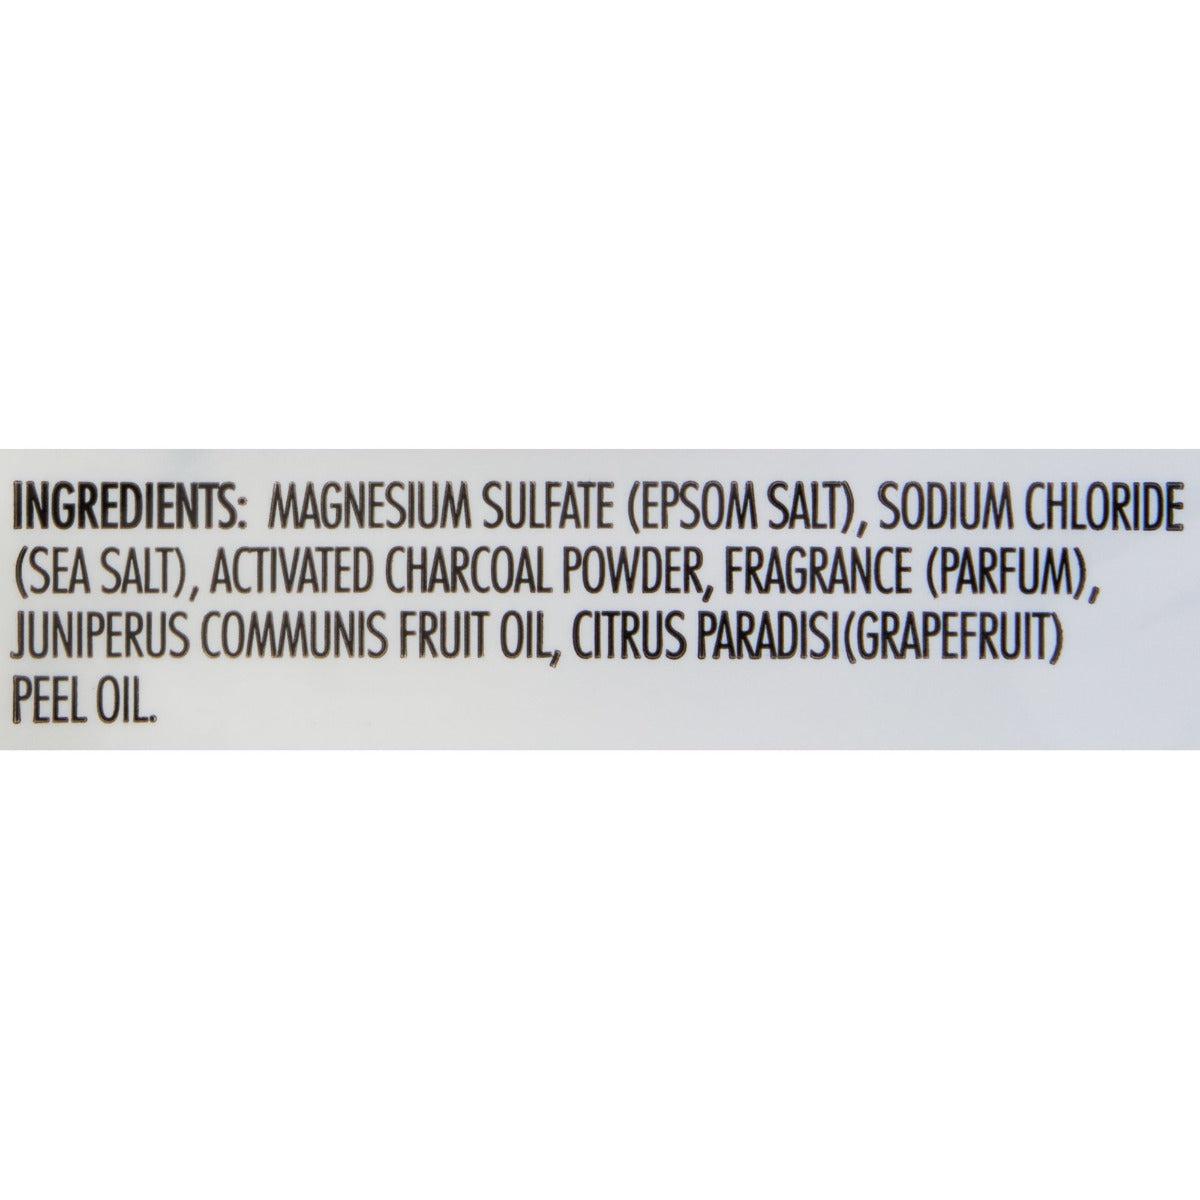 Dr Teal's Pure Epsom Salt Soaking Solution, Activated Charcoal & Hawaiian Black Lava Salt, 3 lbs